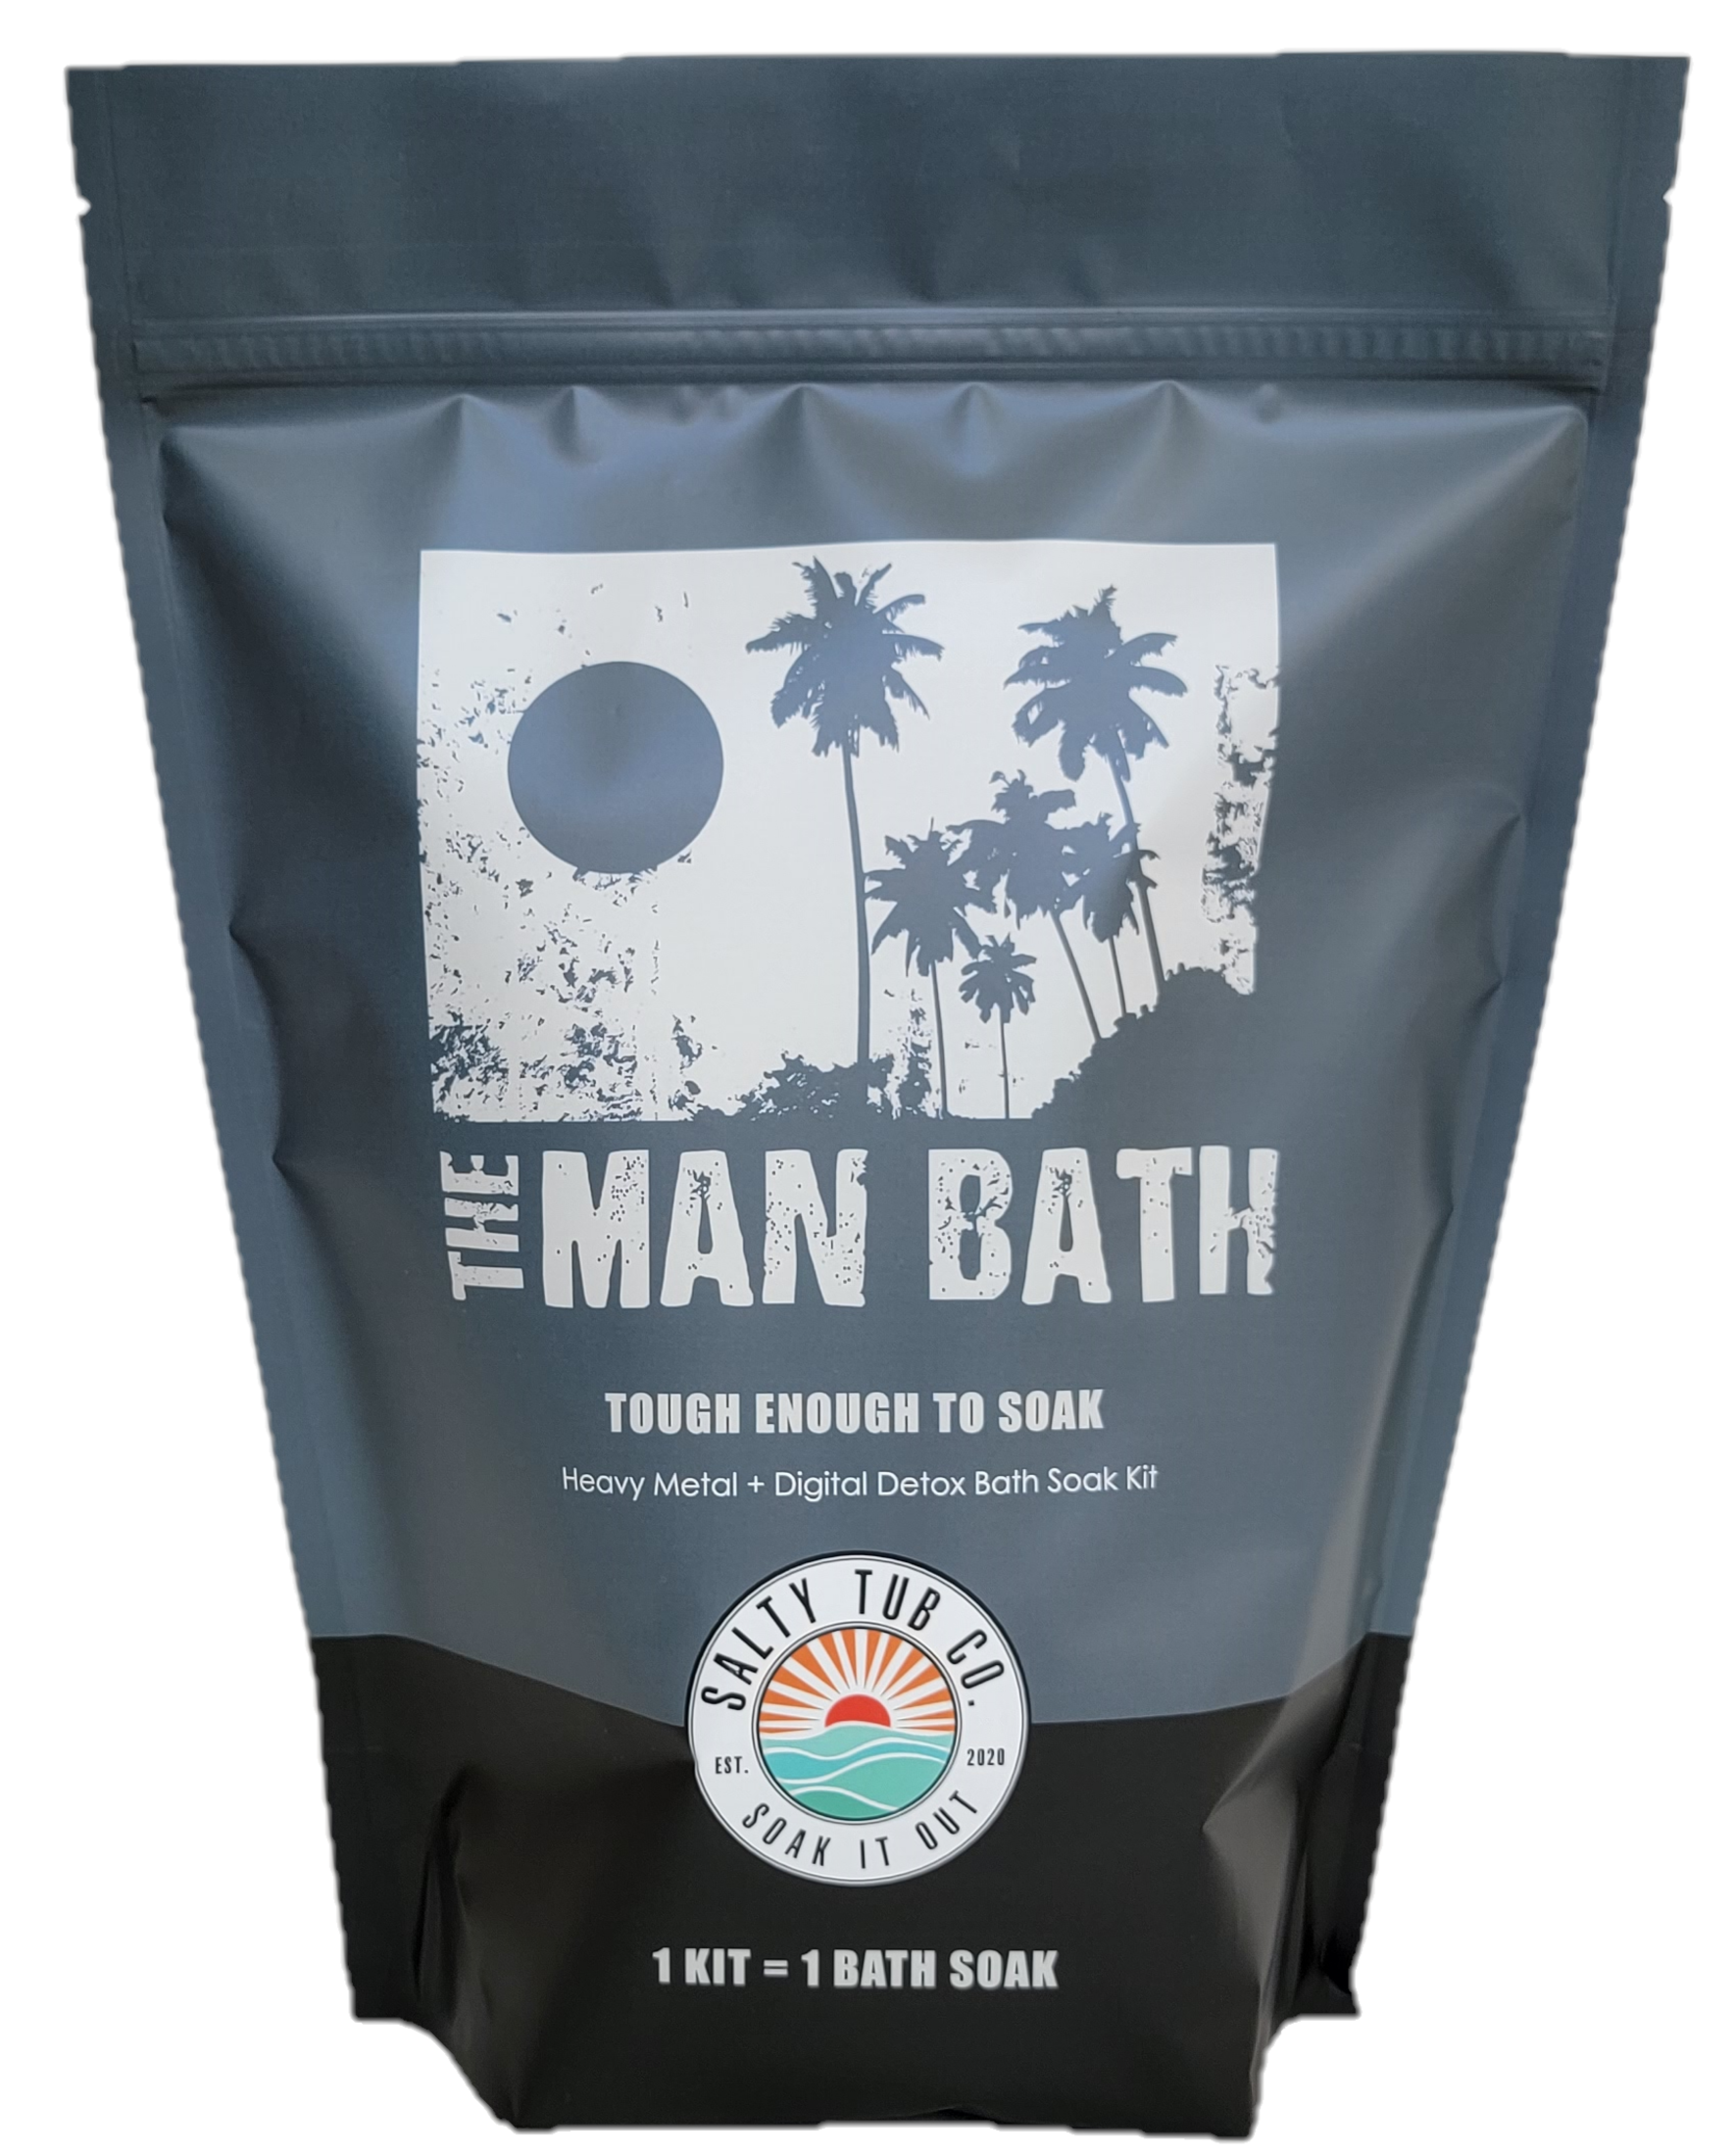 The Man Bath